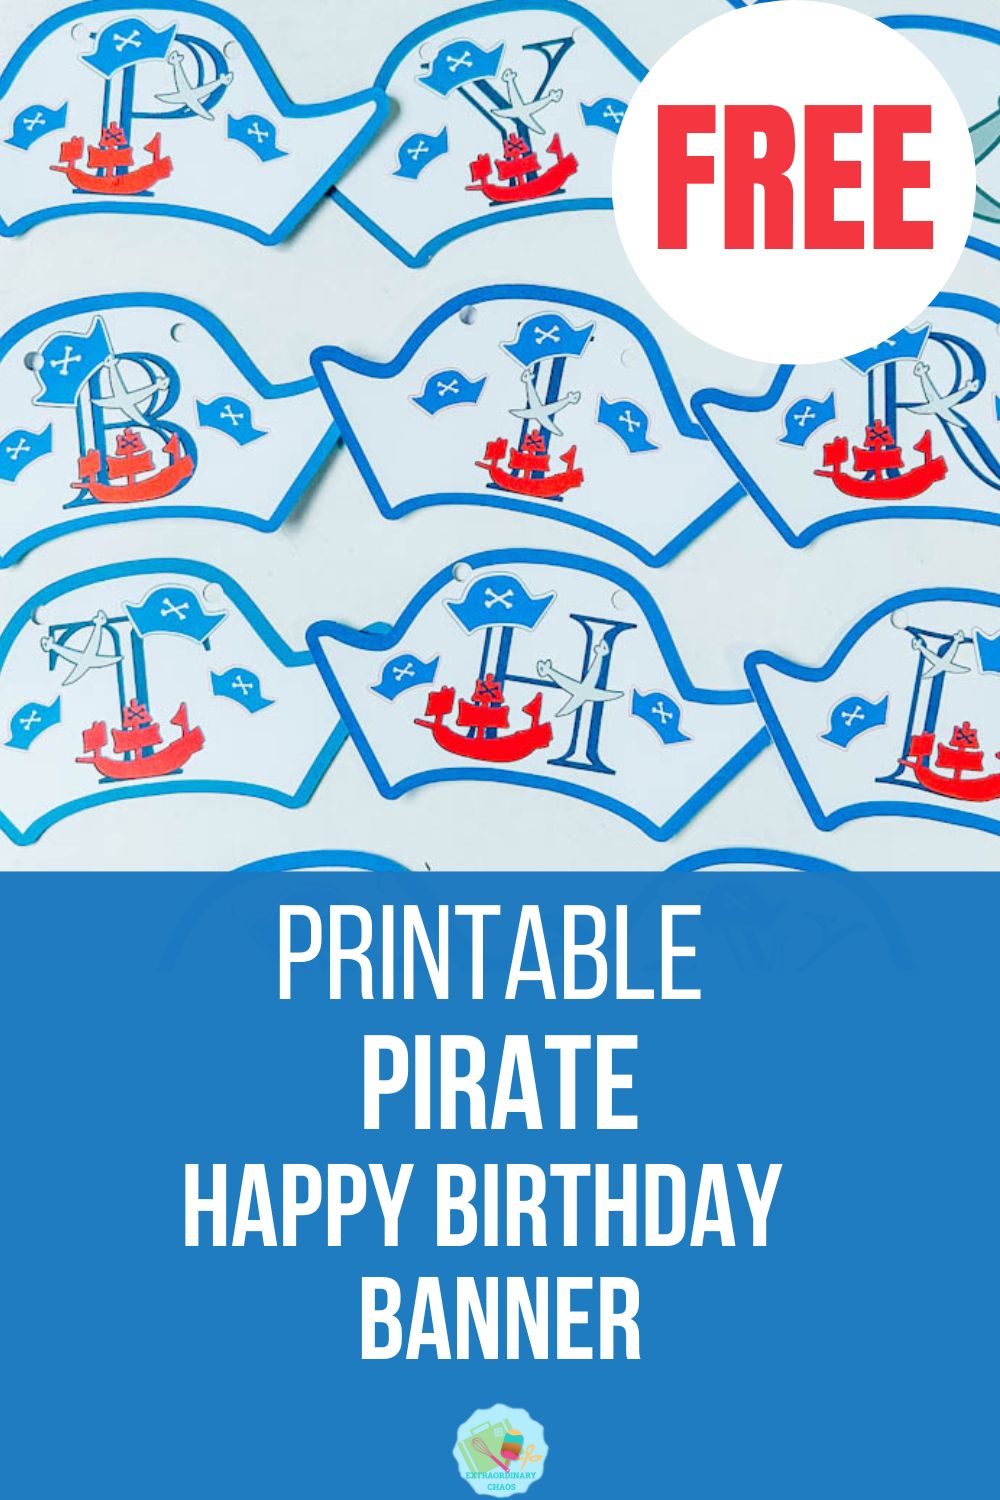 Free printable happy birthday banner